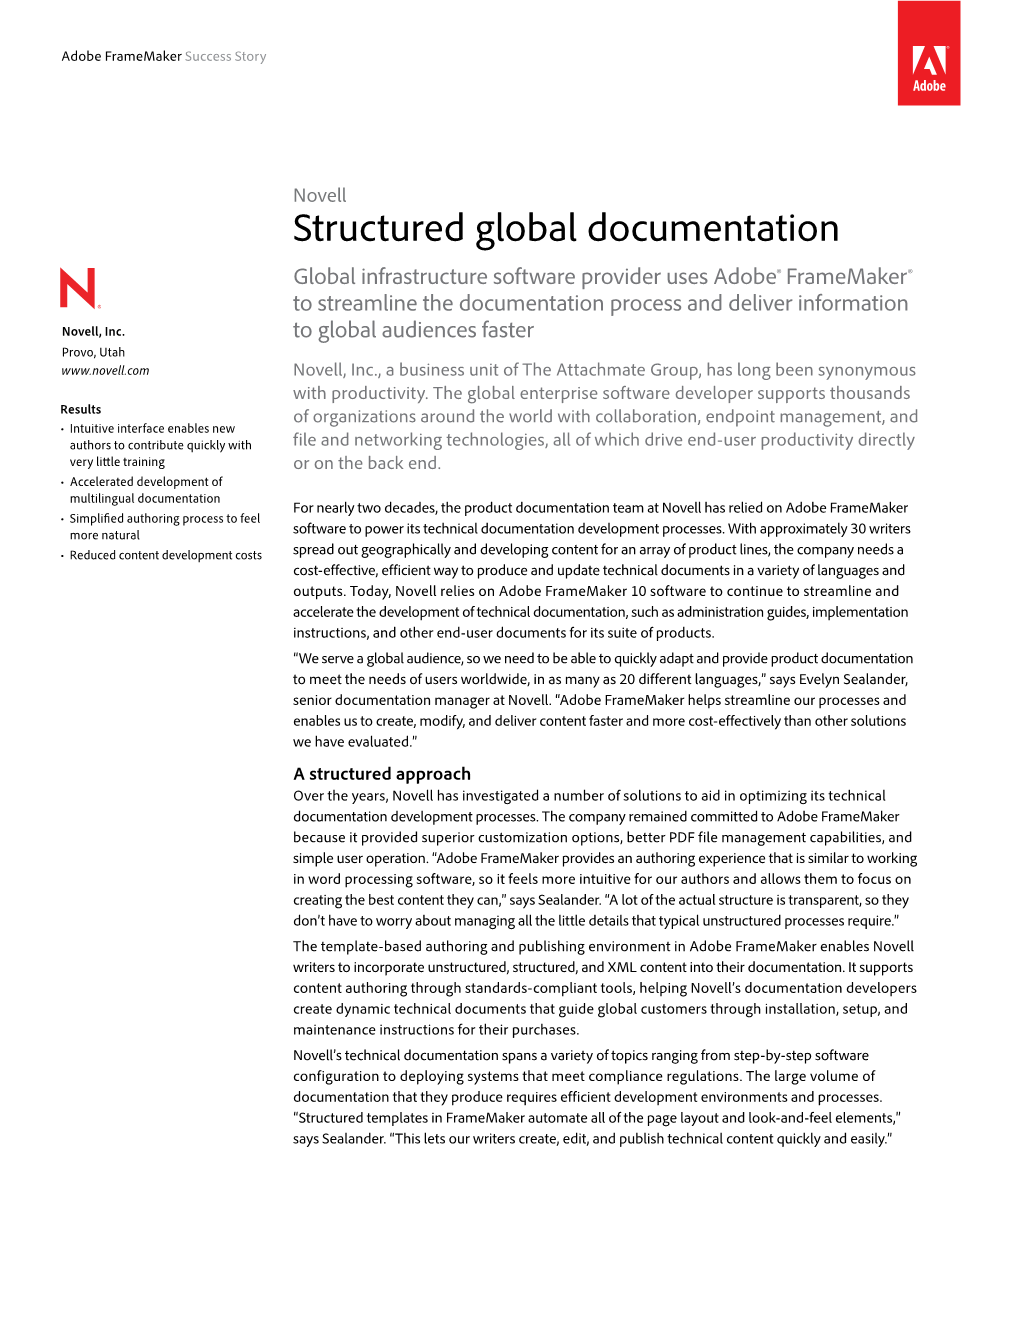 Structured Global Documentation